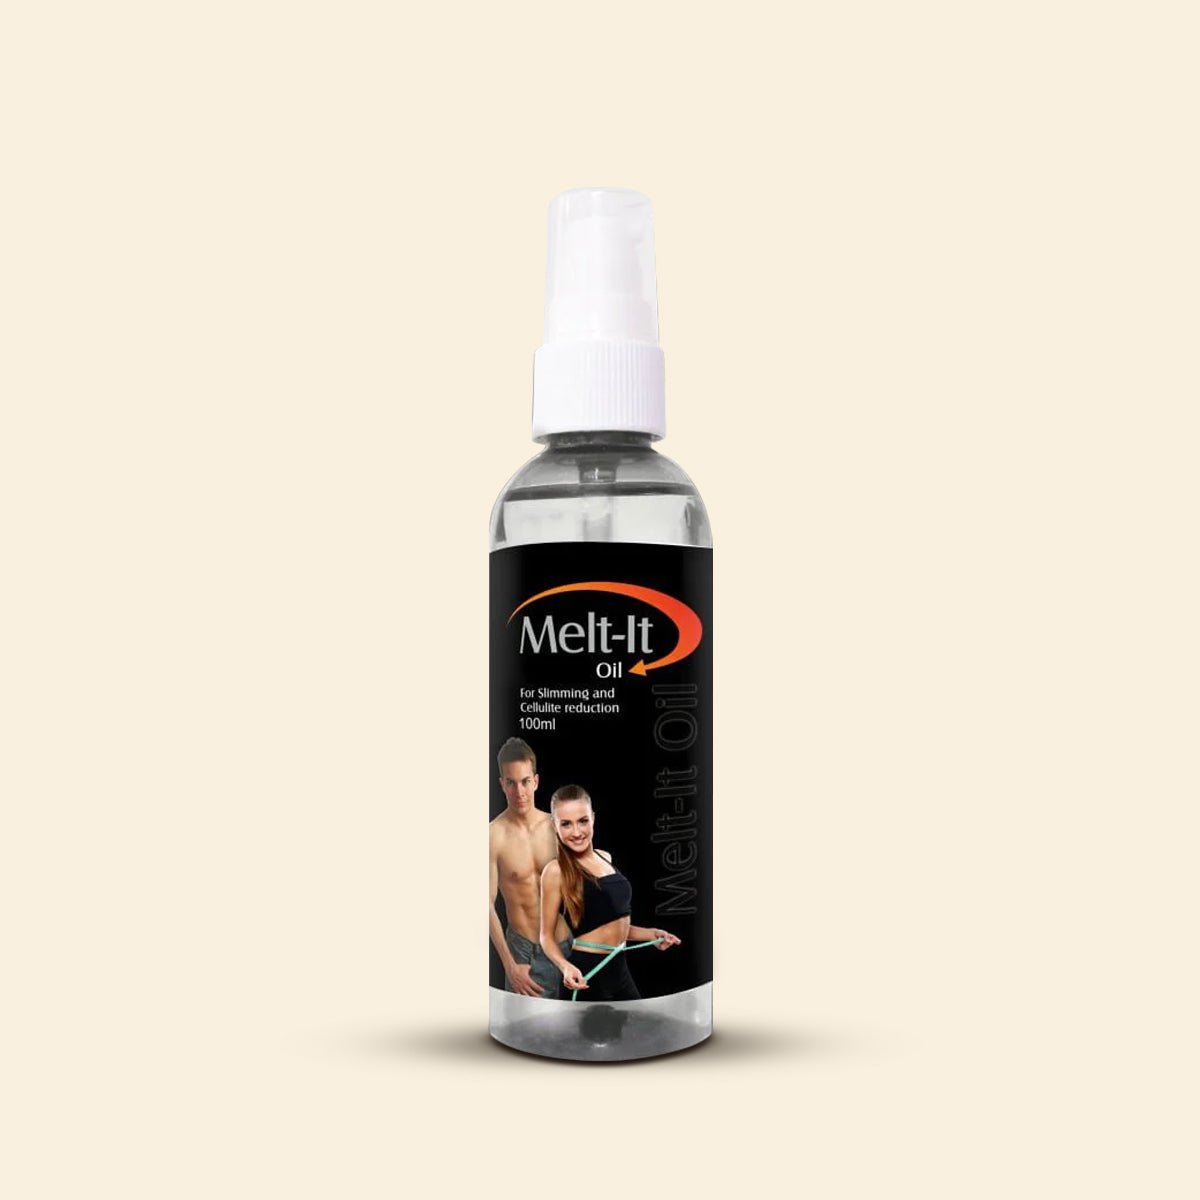 shoprythmindia Meltit Melt-It Anti Cellulite And Slimming Oil 100ml